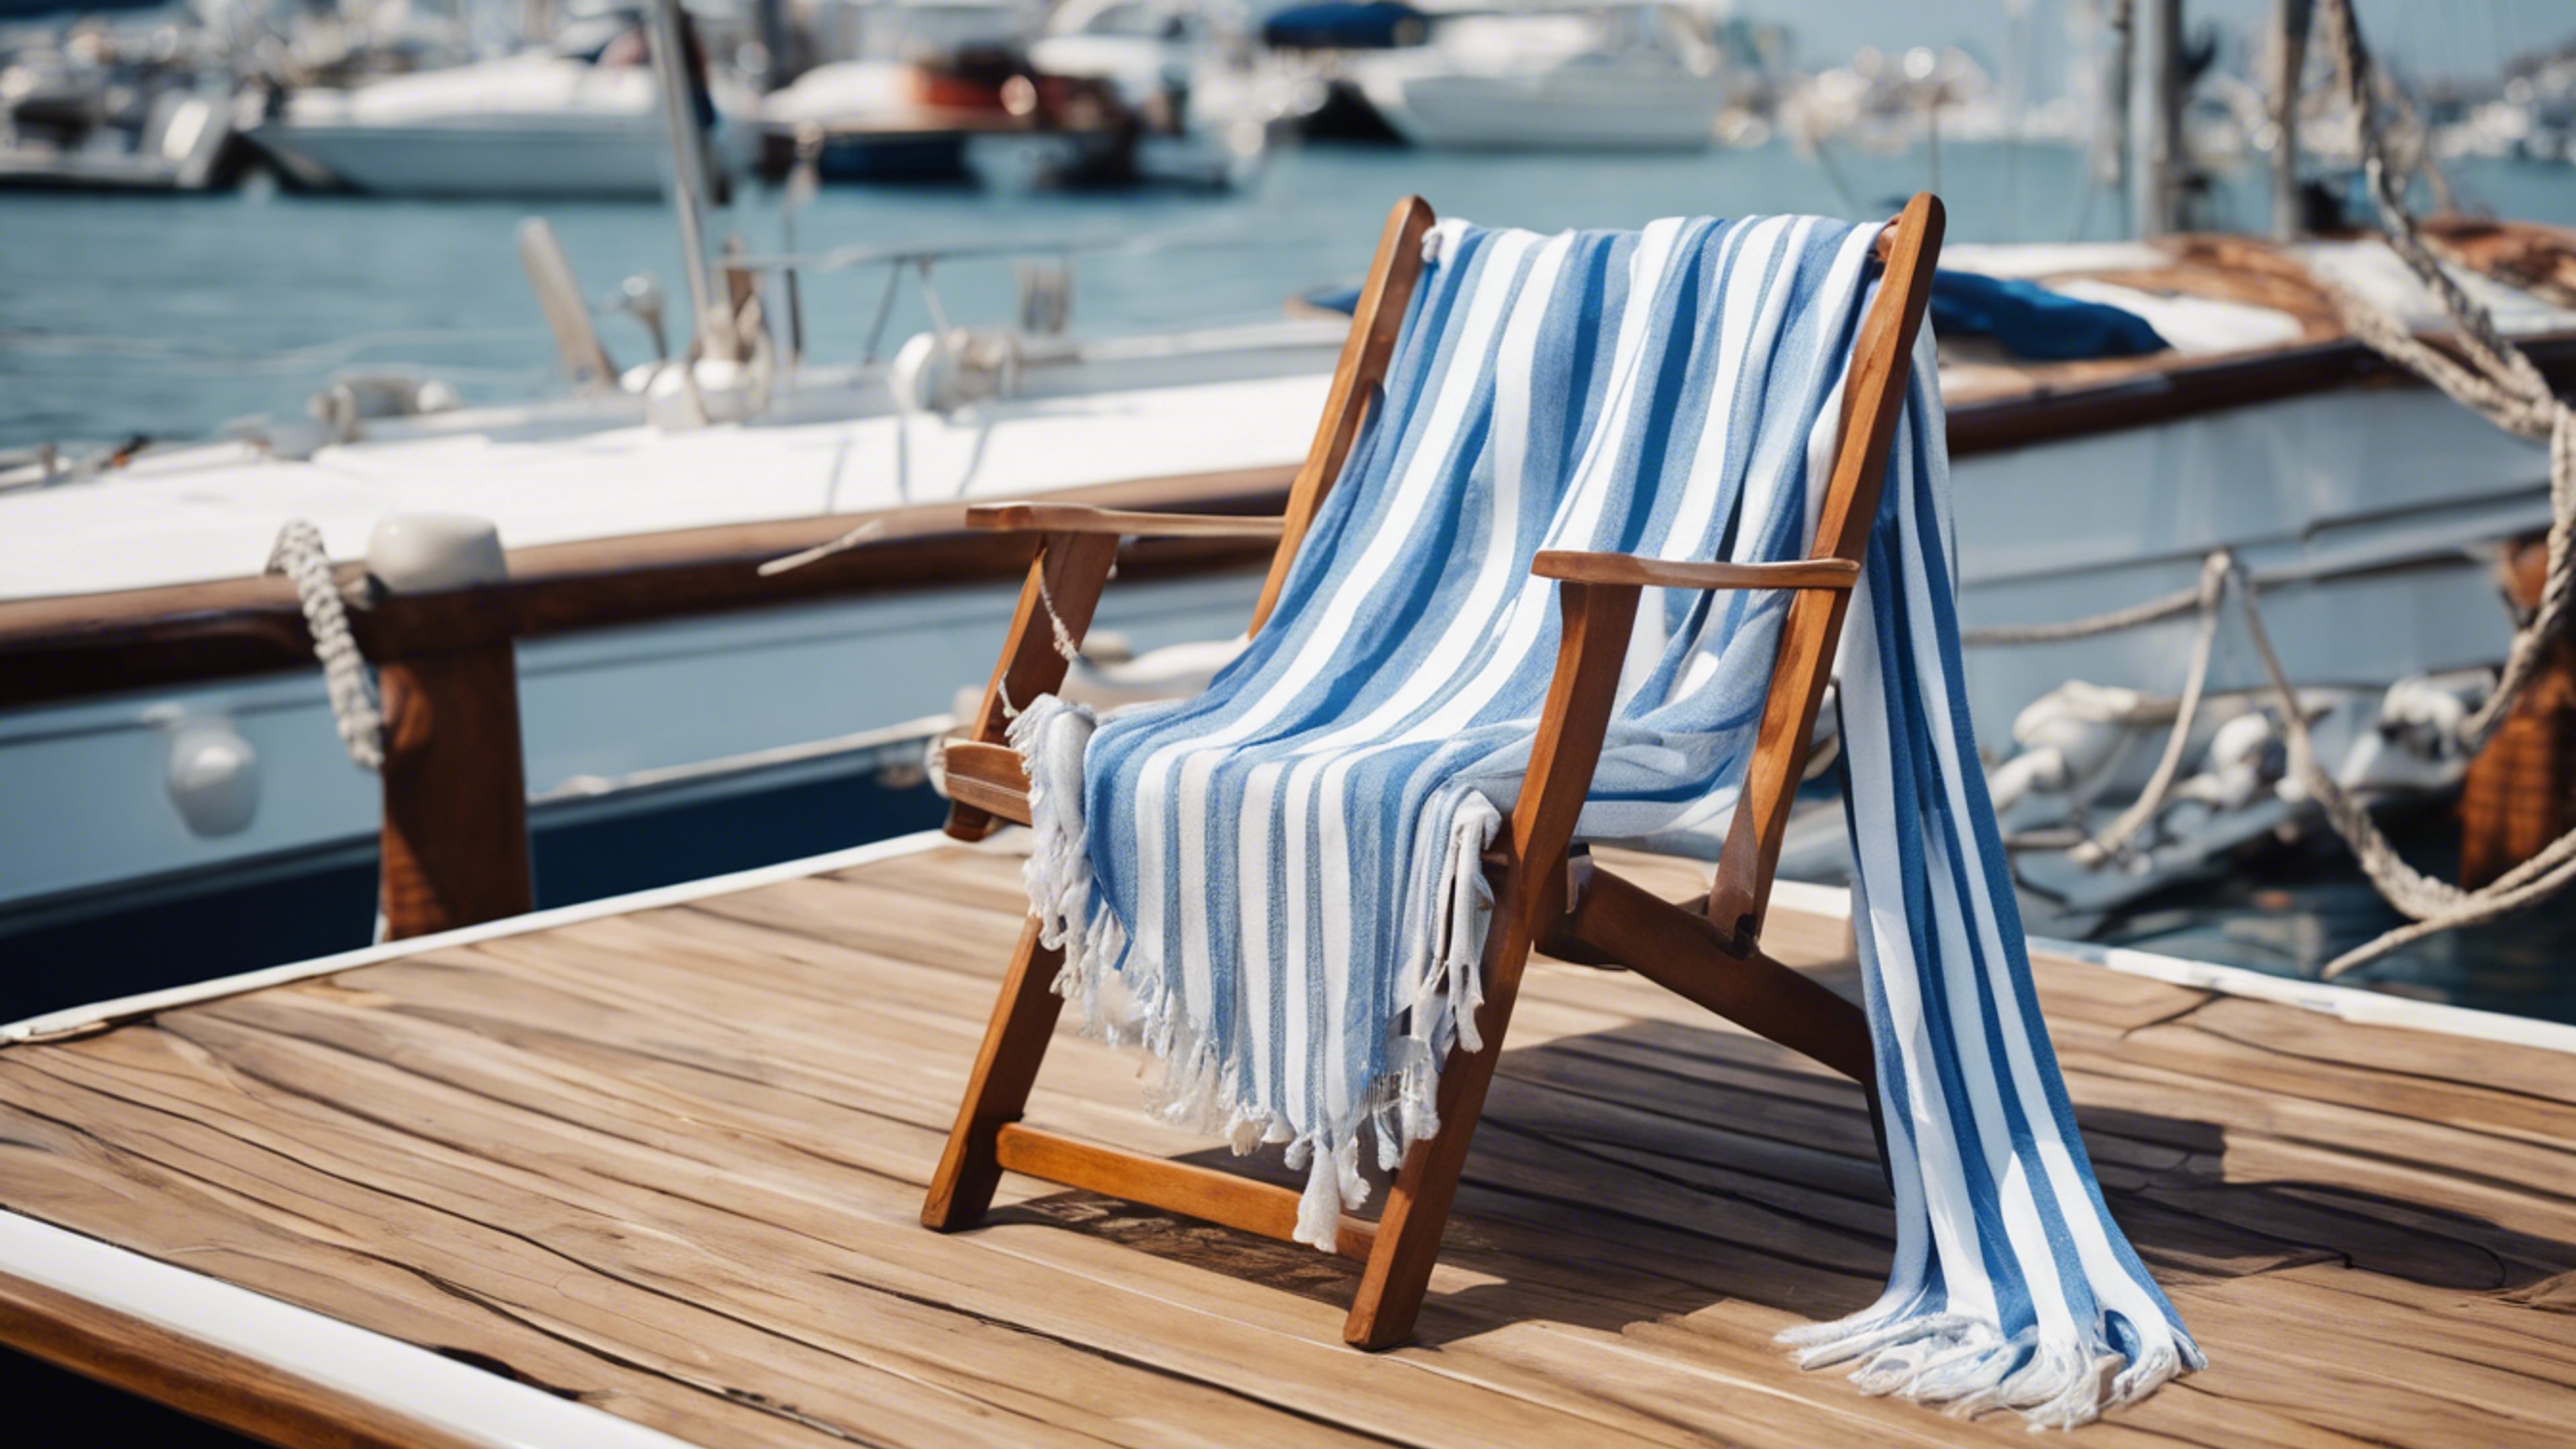 Preppy blue and white striped shawl draped over a teak deck chair on a sailboat. Hintergrund[8e59a438a9aa4e06a25d]